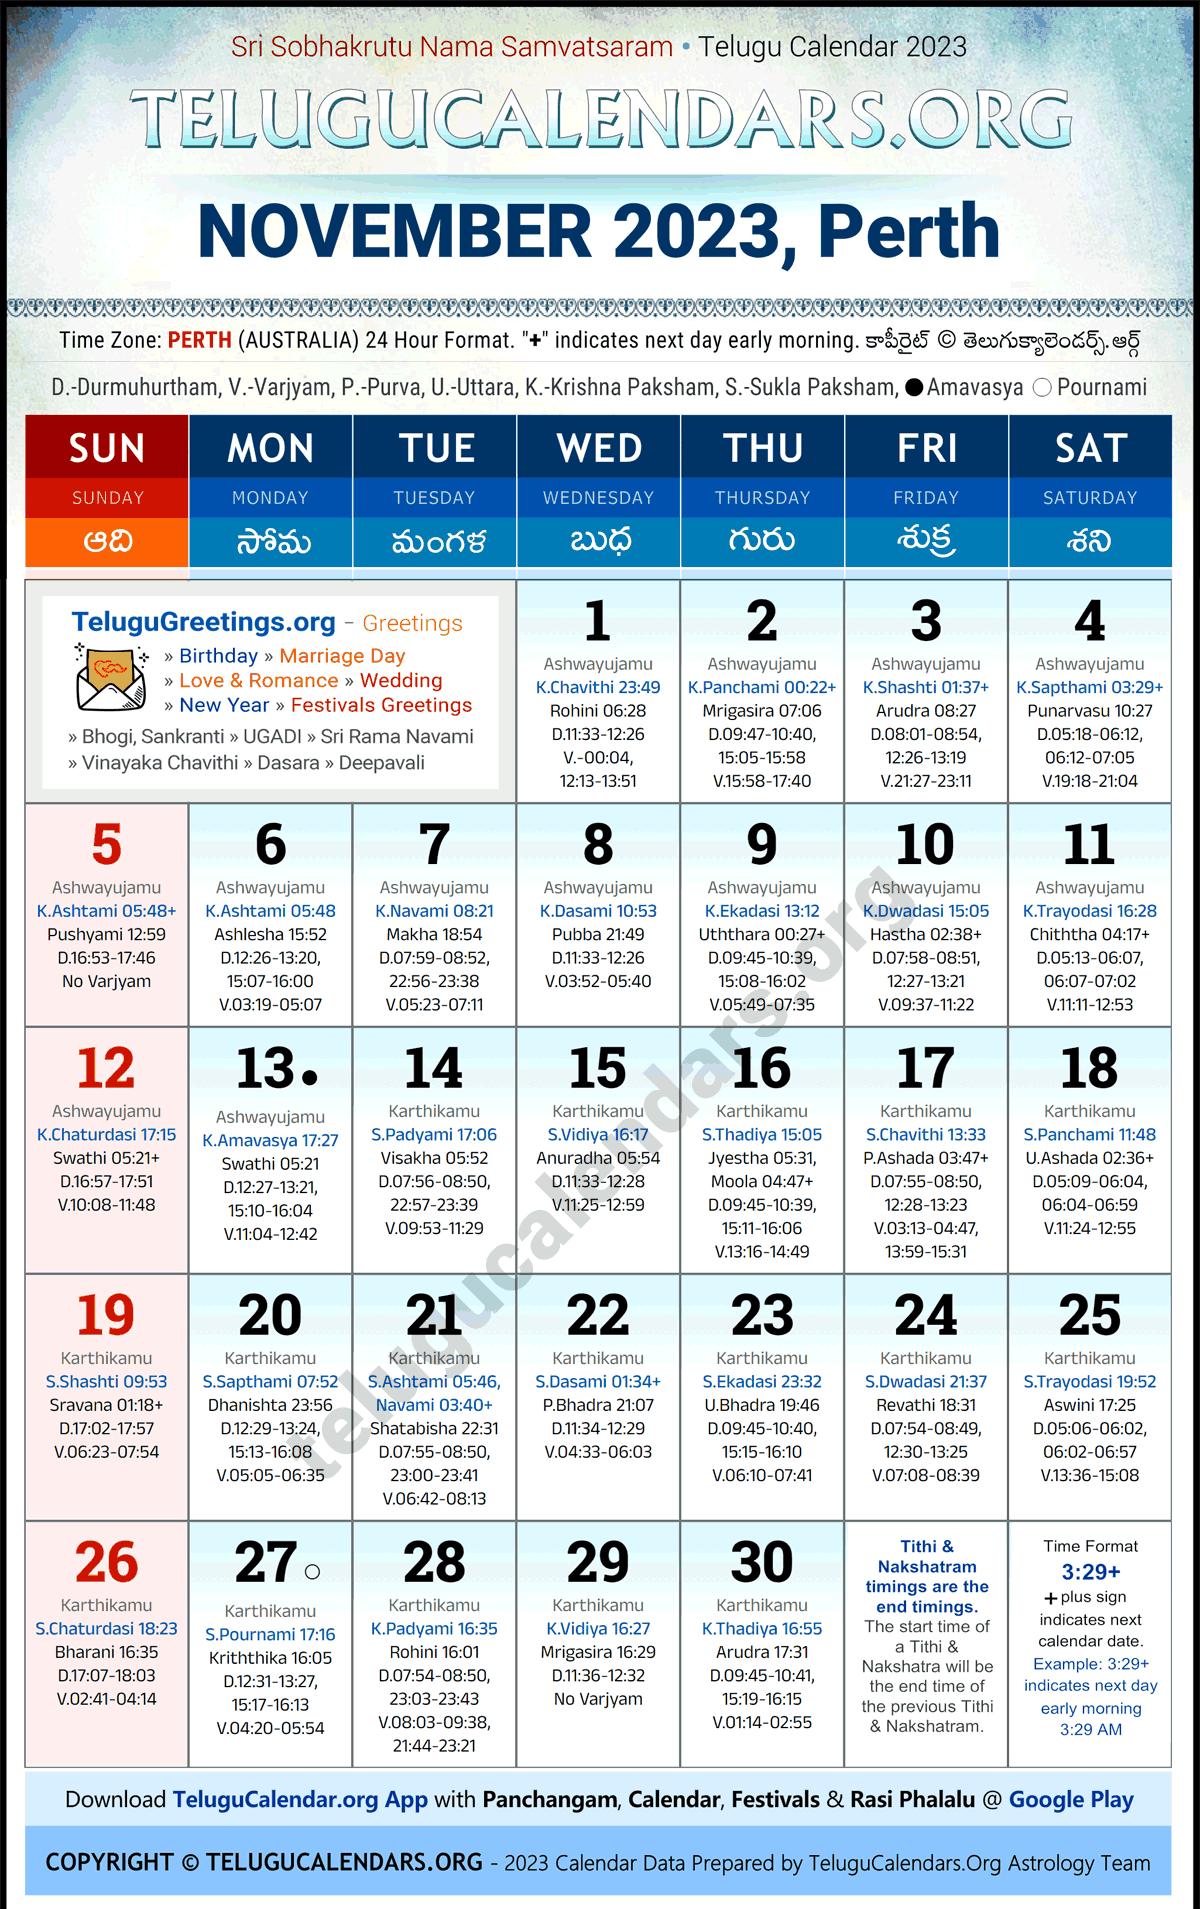 Telugu Calendar 2023 November Festivals for Perth